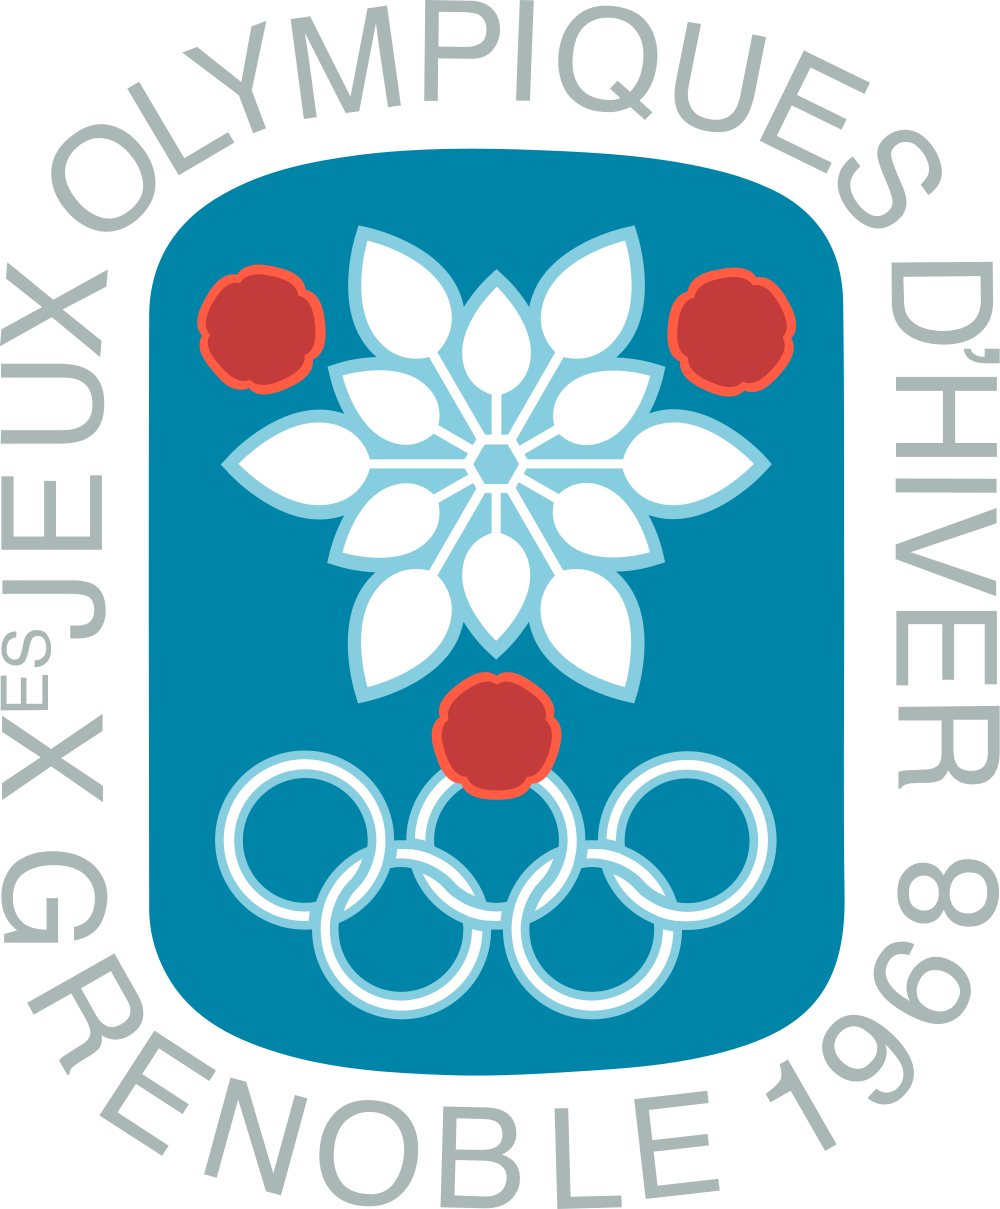 1968 Grenoble Winter Olympics logo png transparent